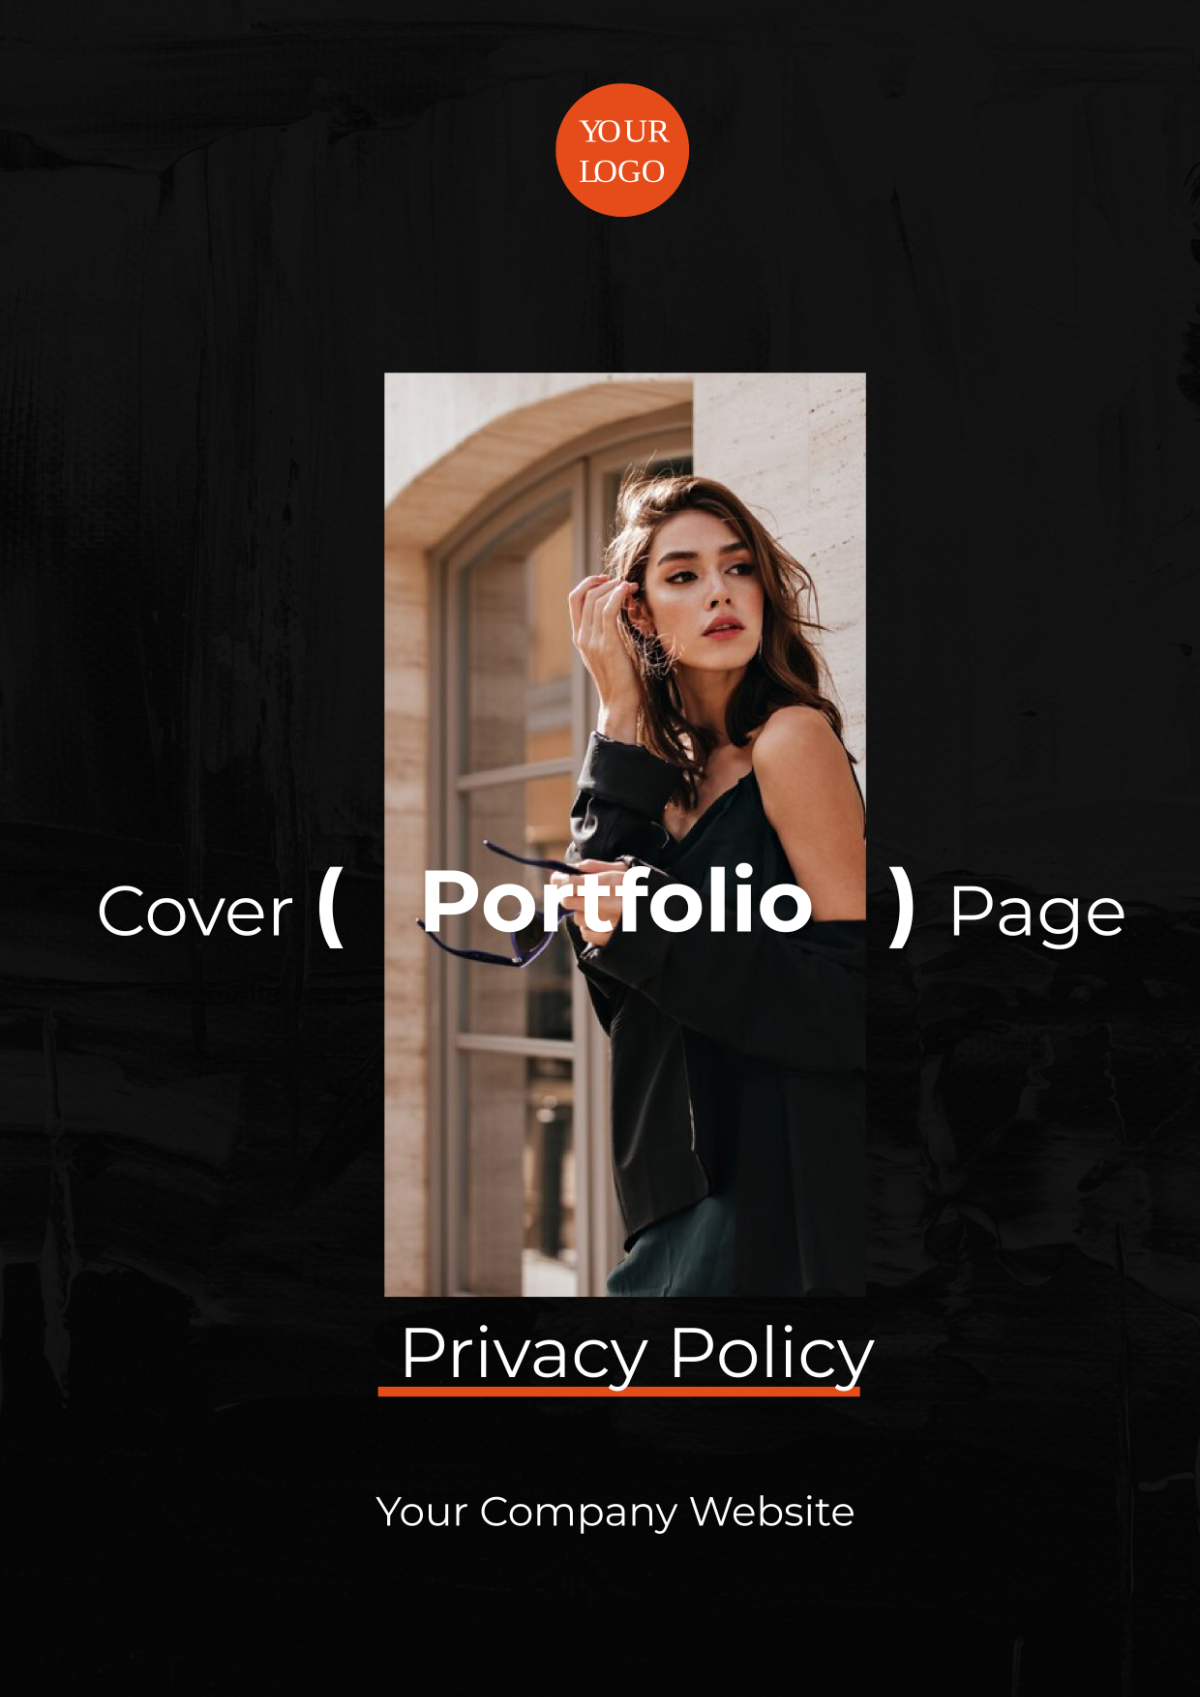 Portfolio Privacy Policy Cover Page